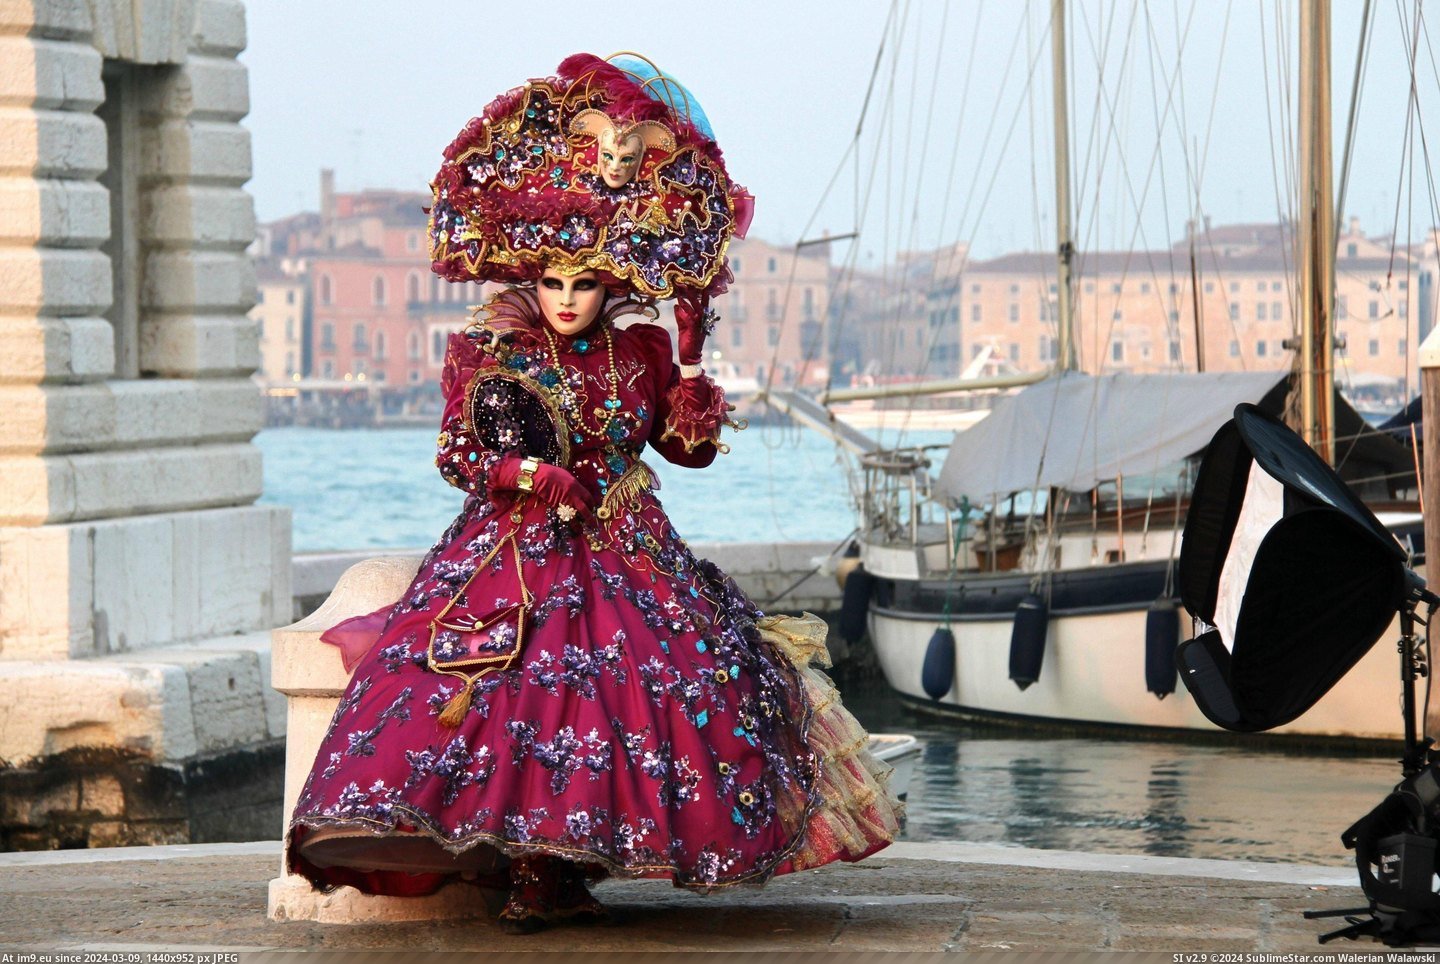 #Costume #Carnival #Venice [Pics] Venice Carnival Costume Pic. (Изображение из альбом My r/PICS favs))